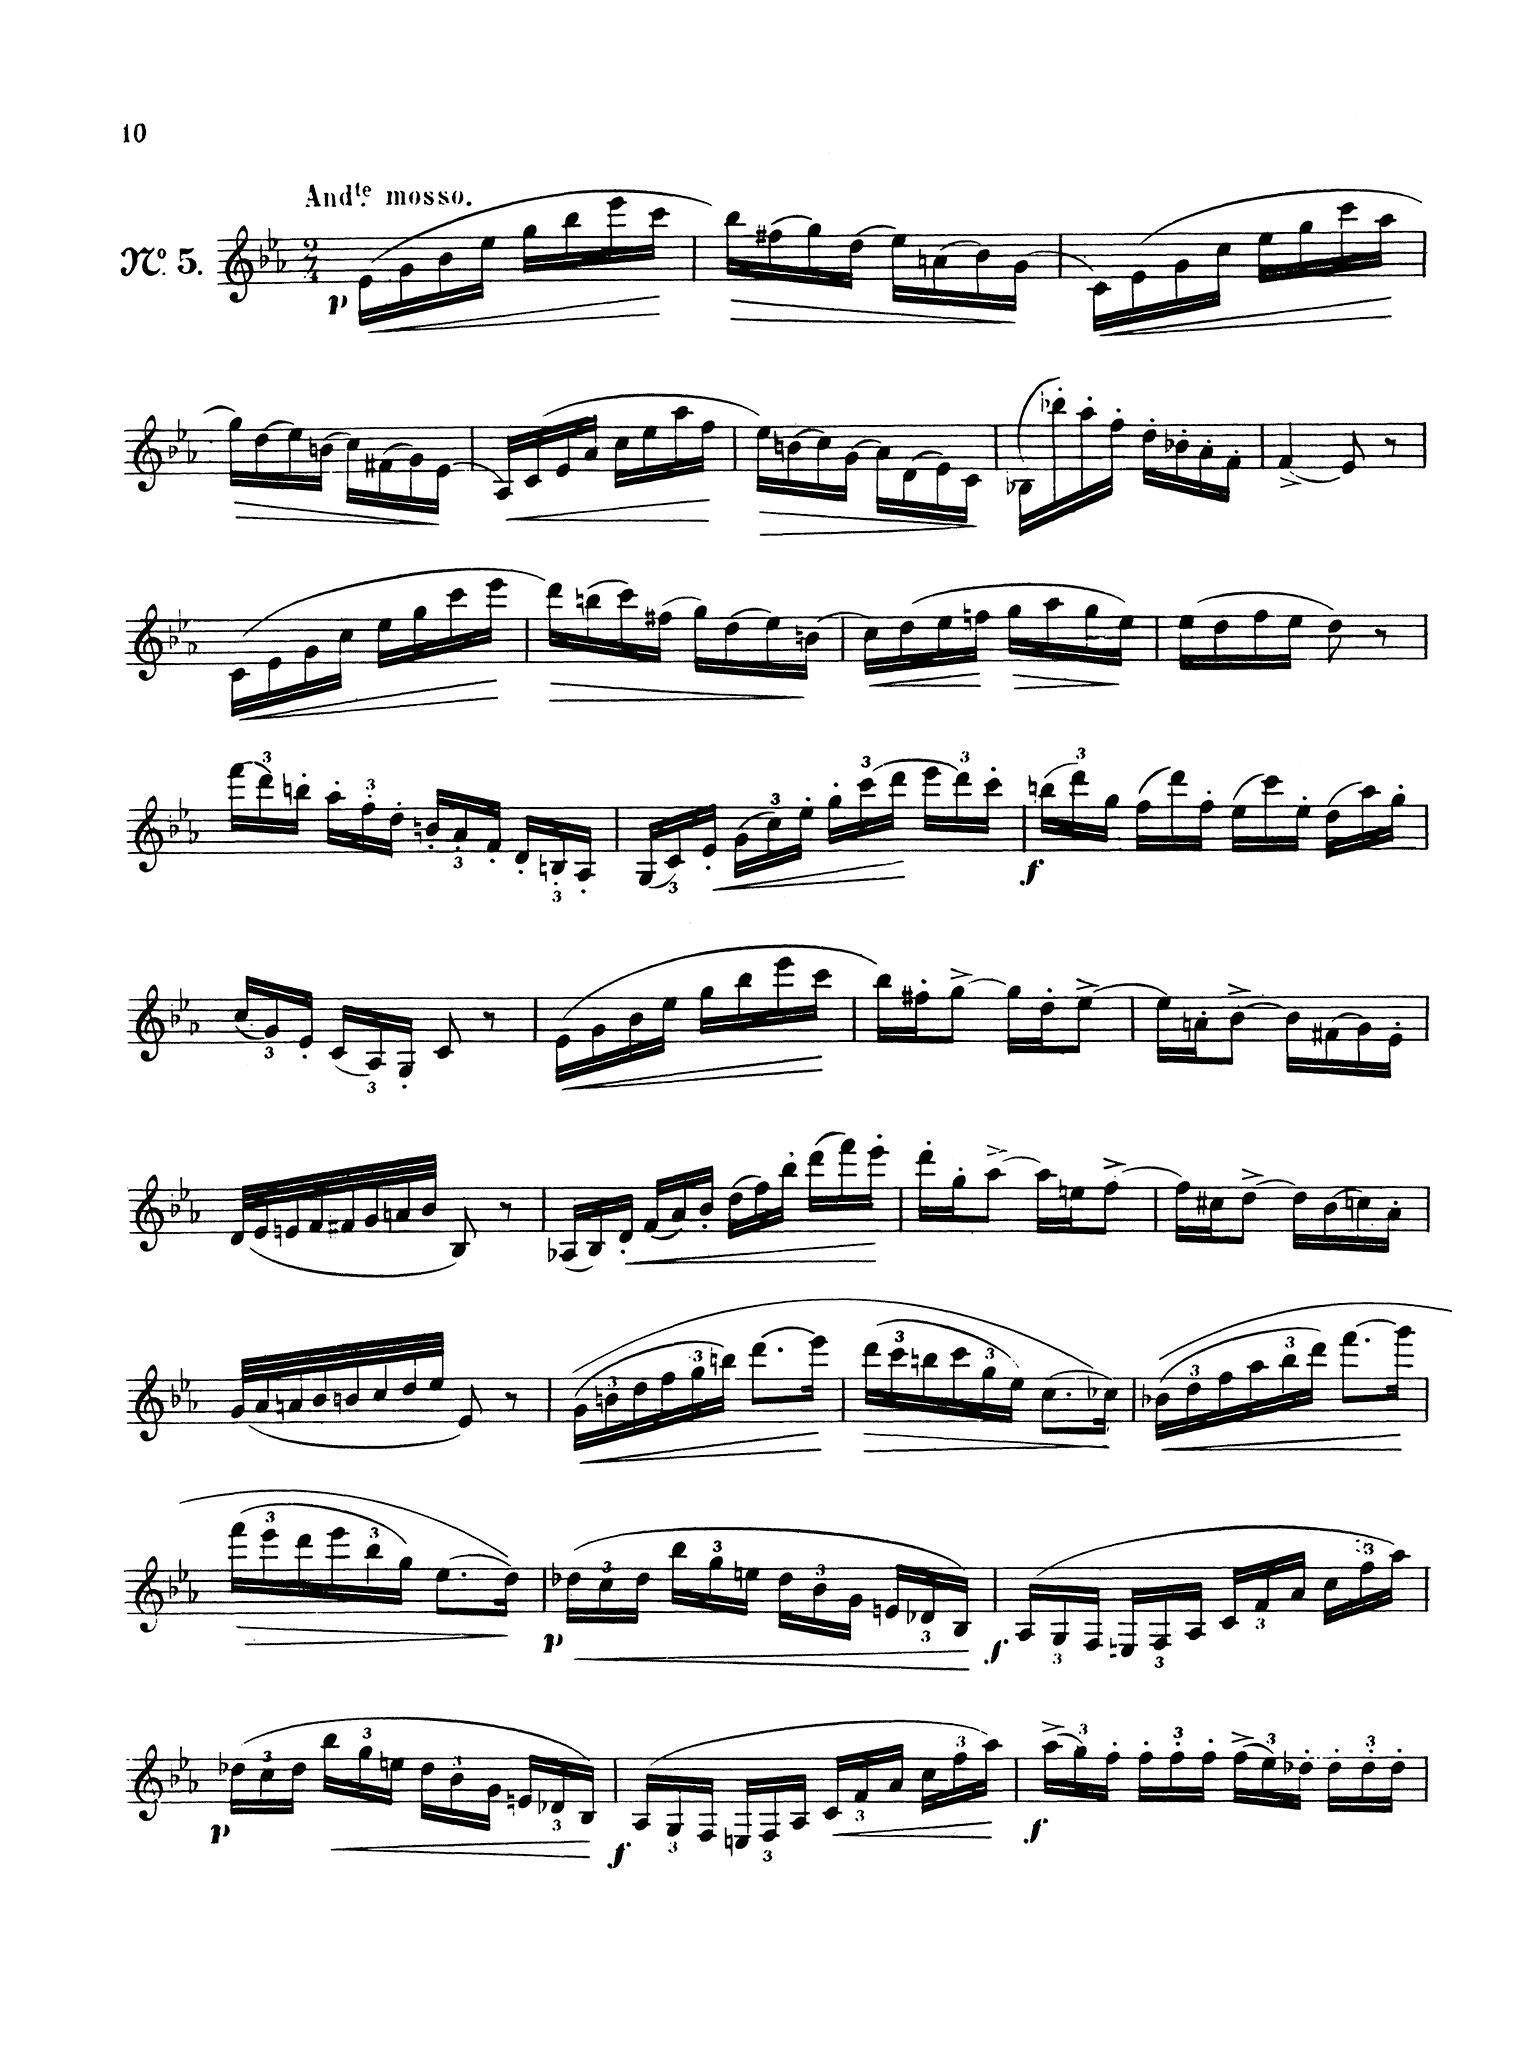 Magnani 10 Studi Capriccio of Great Difficulty for Clarinet No. 5